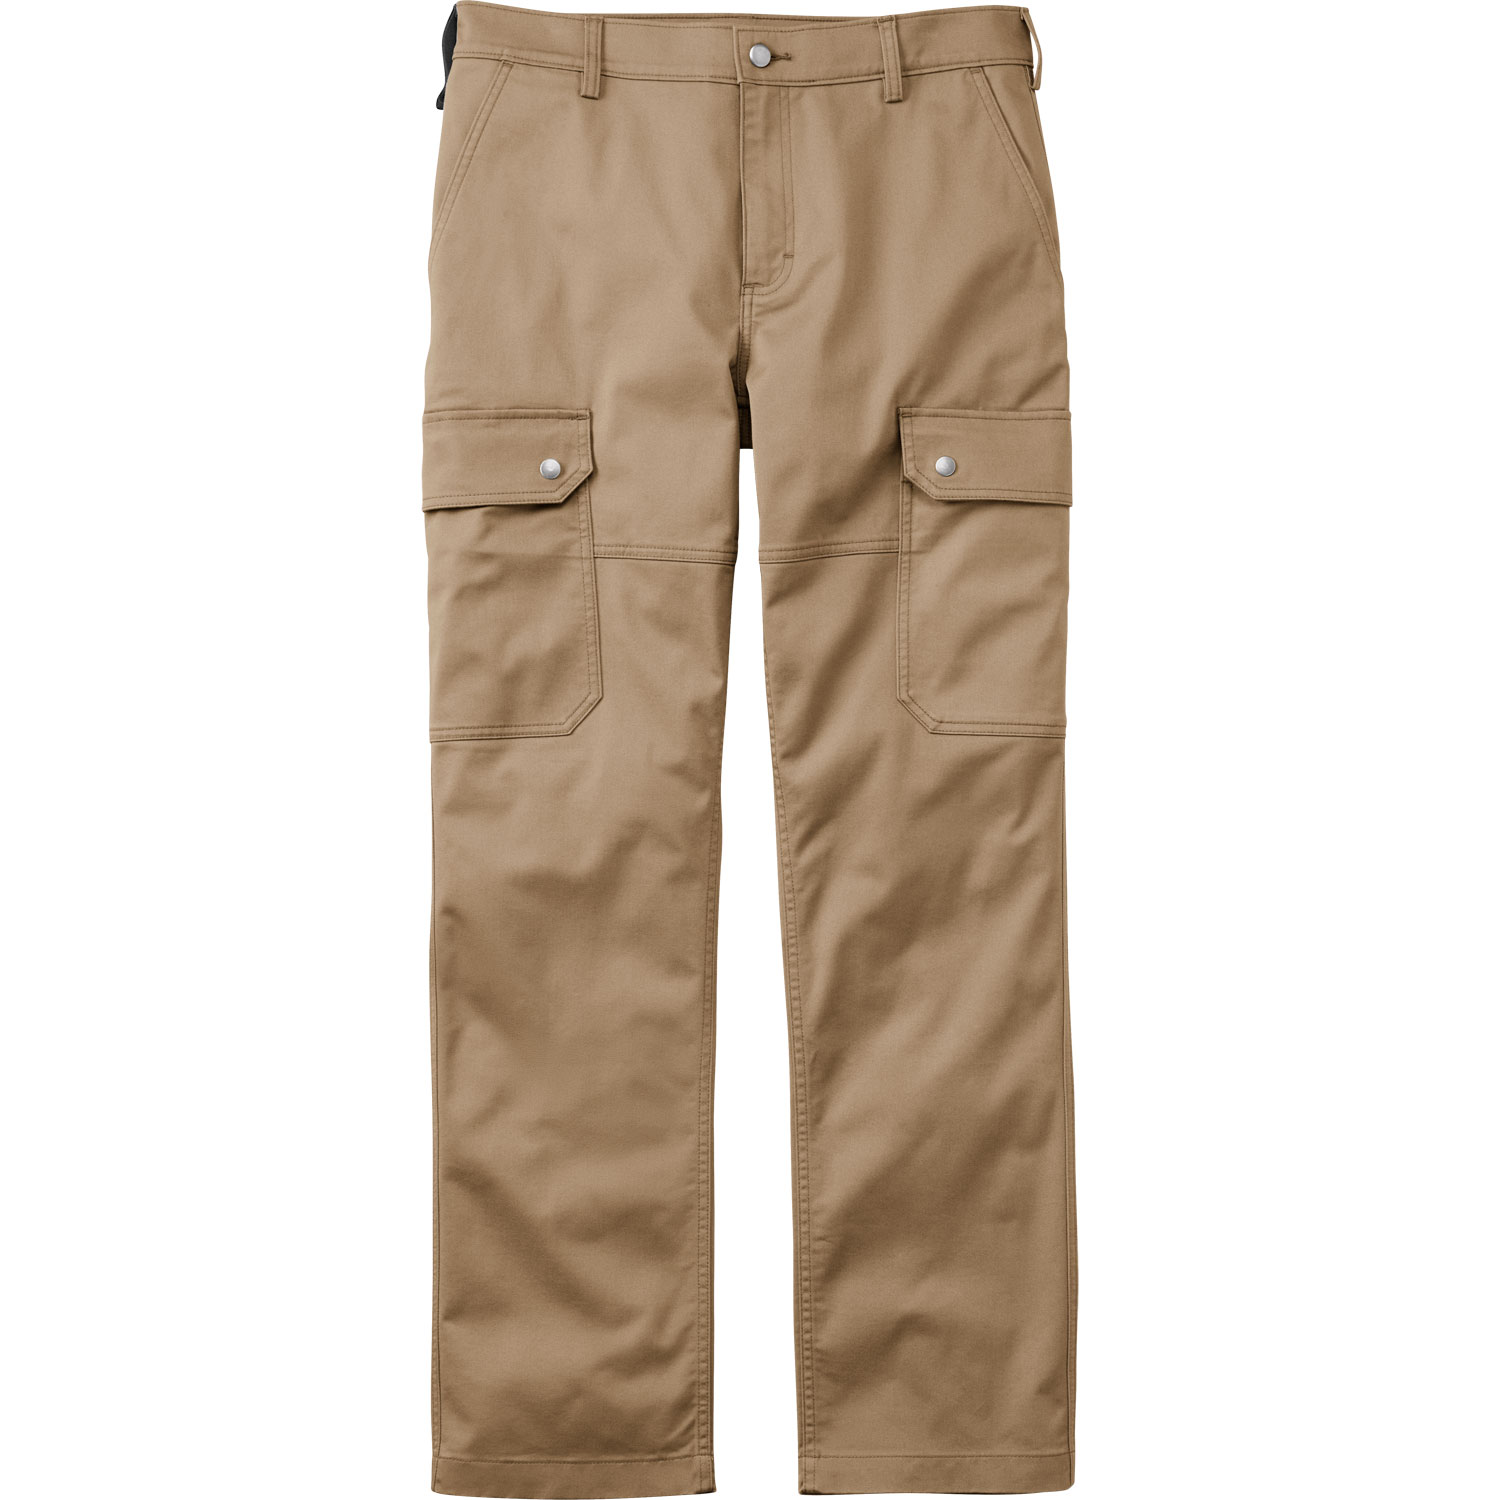 Duluth Trading Co. 40 GRIT Mens 38x34 Flex Stretch Slim Fit Beige Khaki  Pants